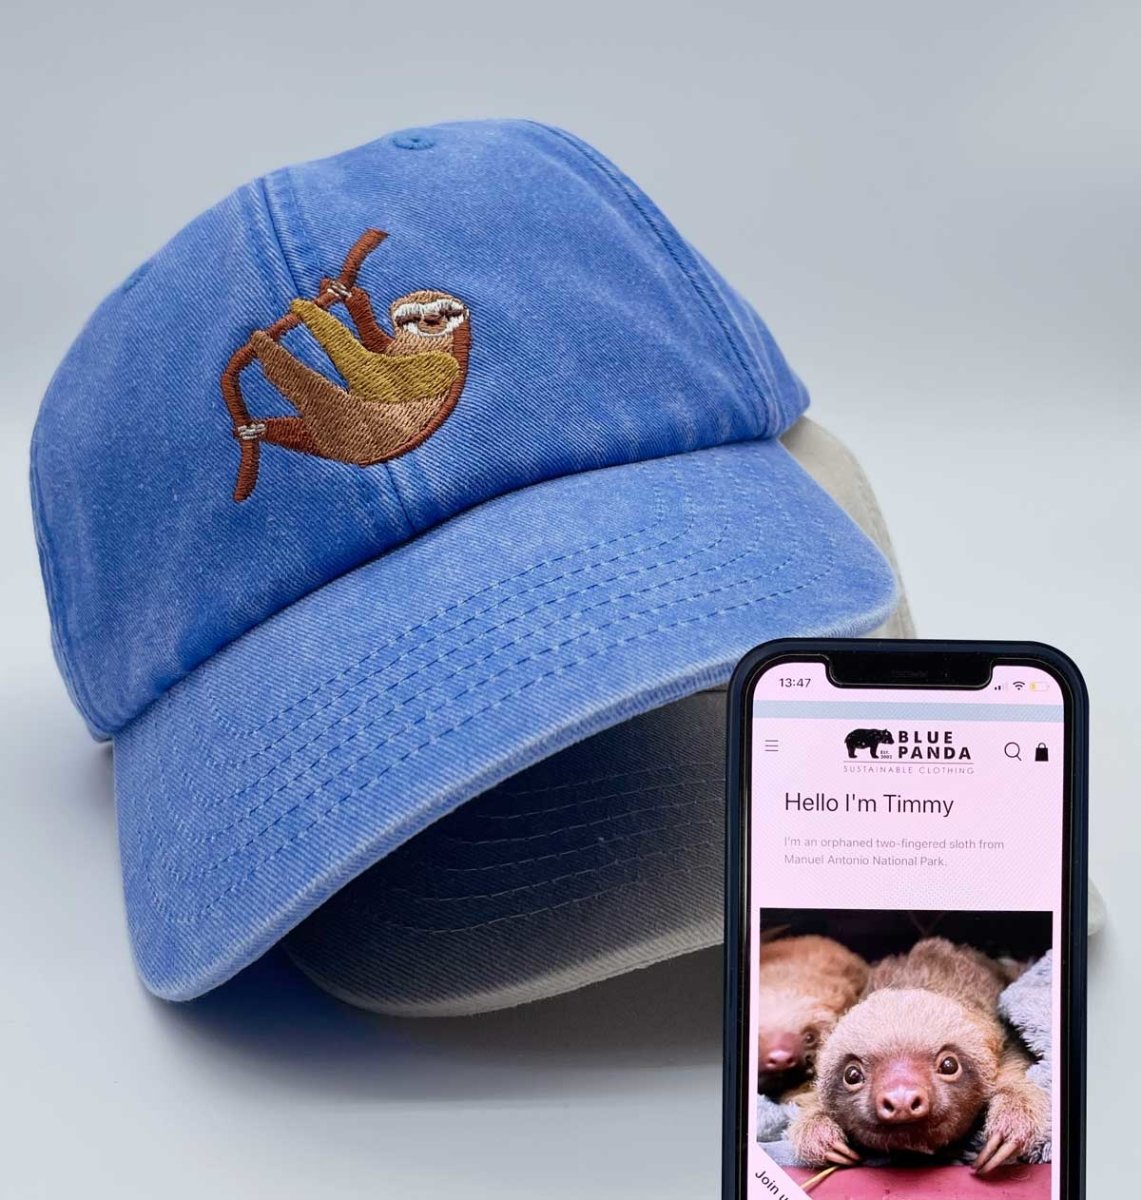 NEW Sloth Saving Cap - Scan on Your Phone - Blue Panda